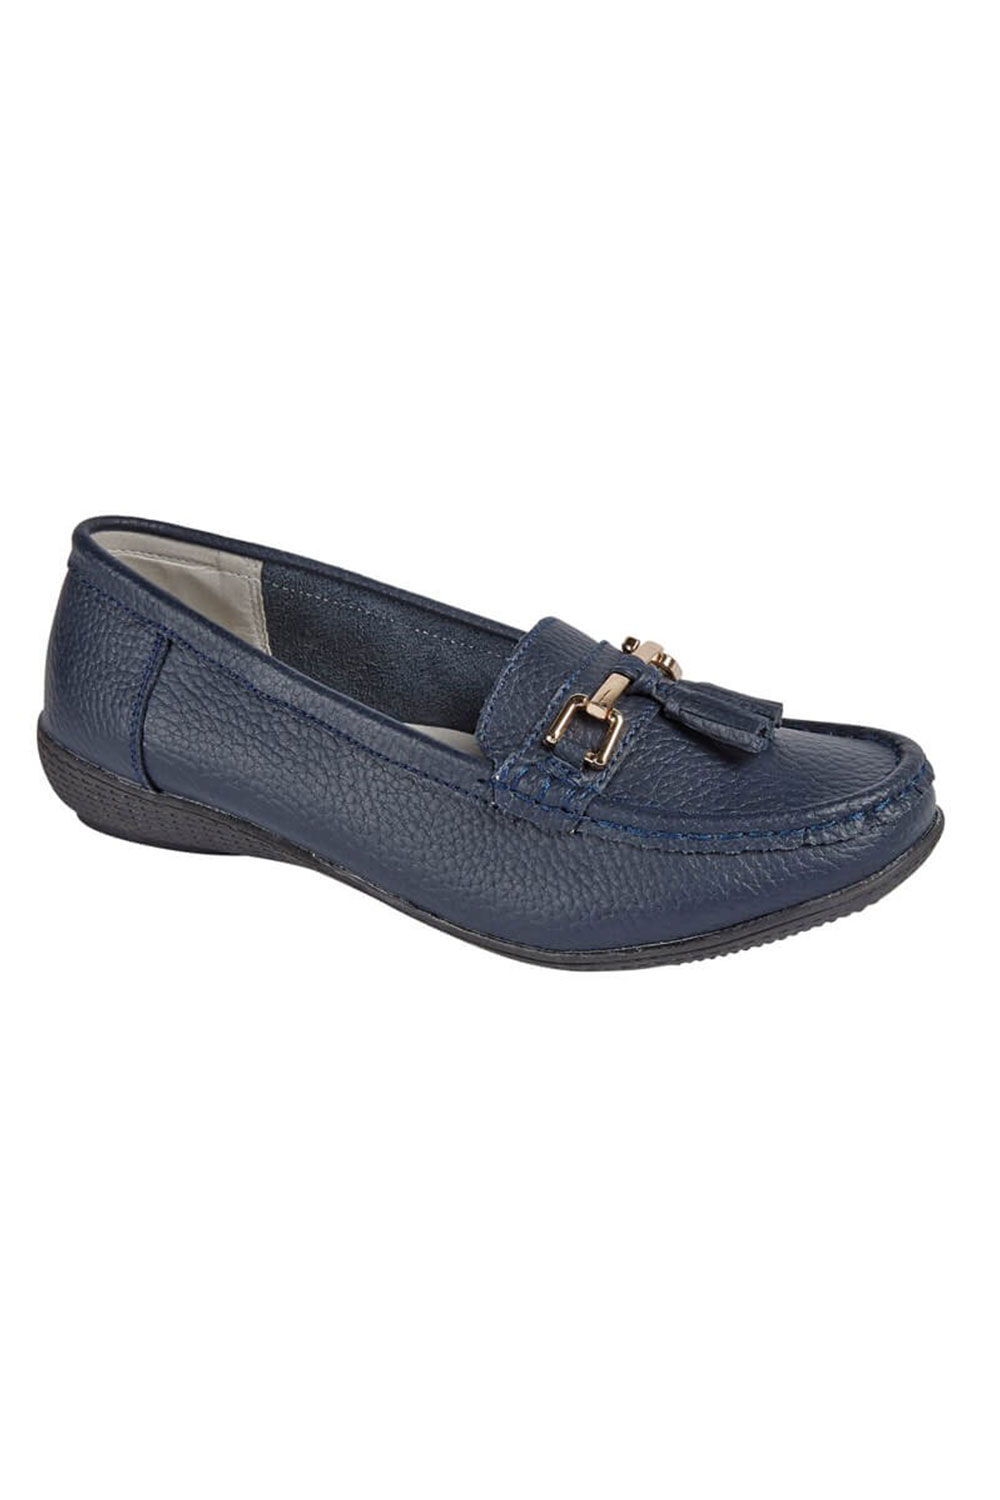 Jo & Joe Women’s Navy Blue Leather Moccasin Shoes with Tassel Detail, Size: 4